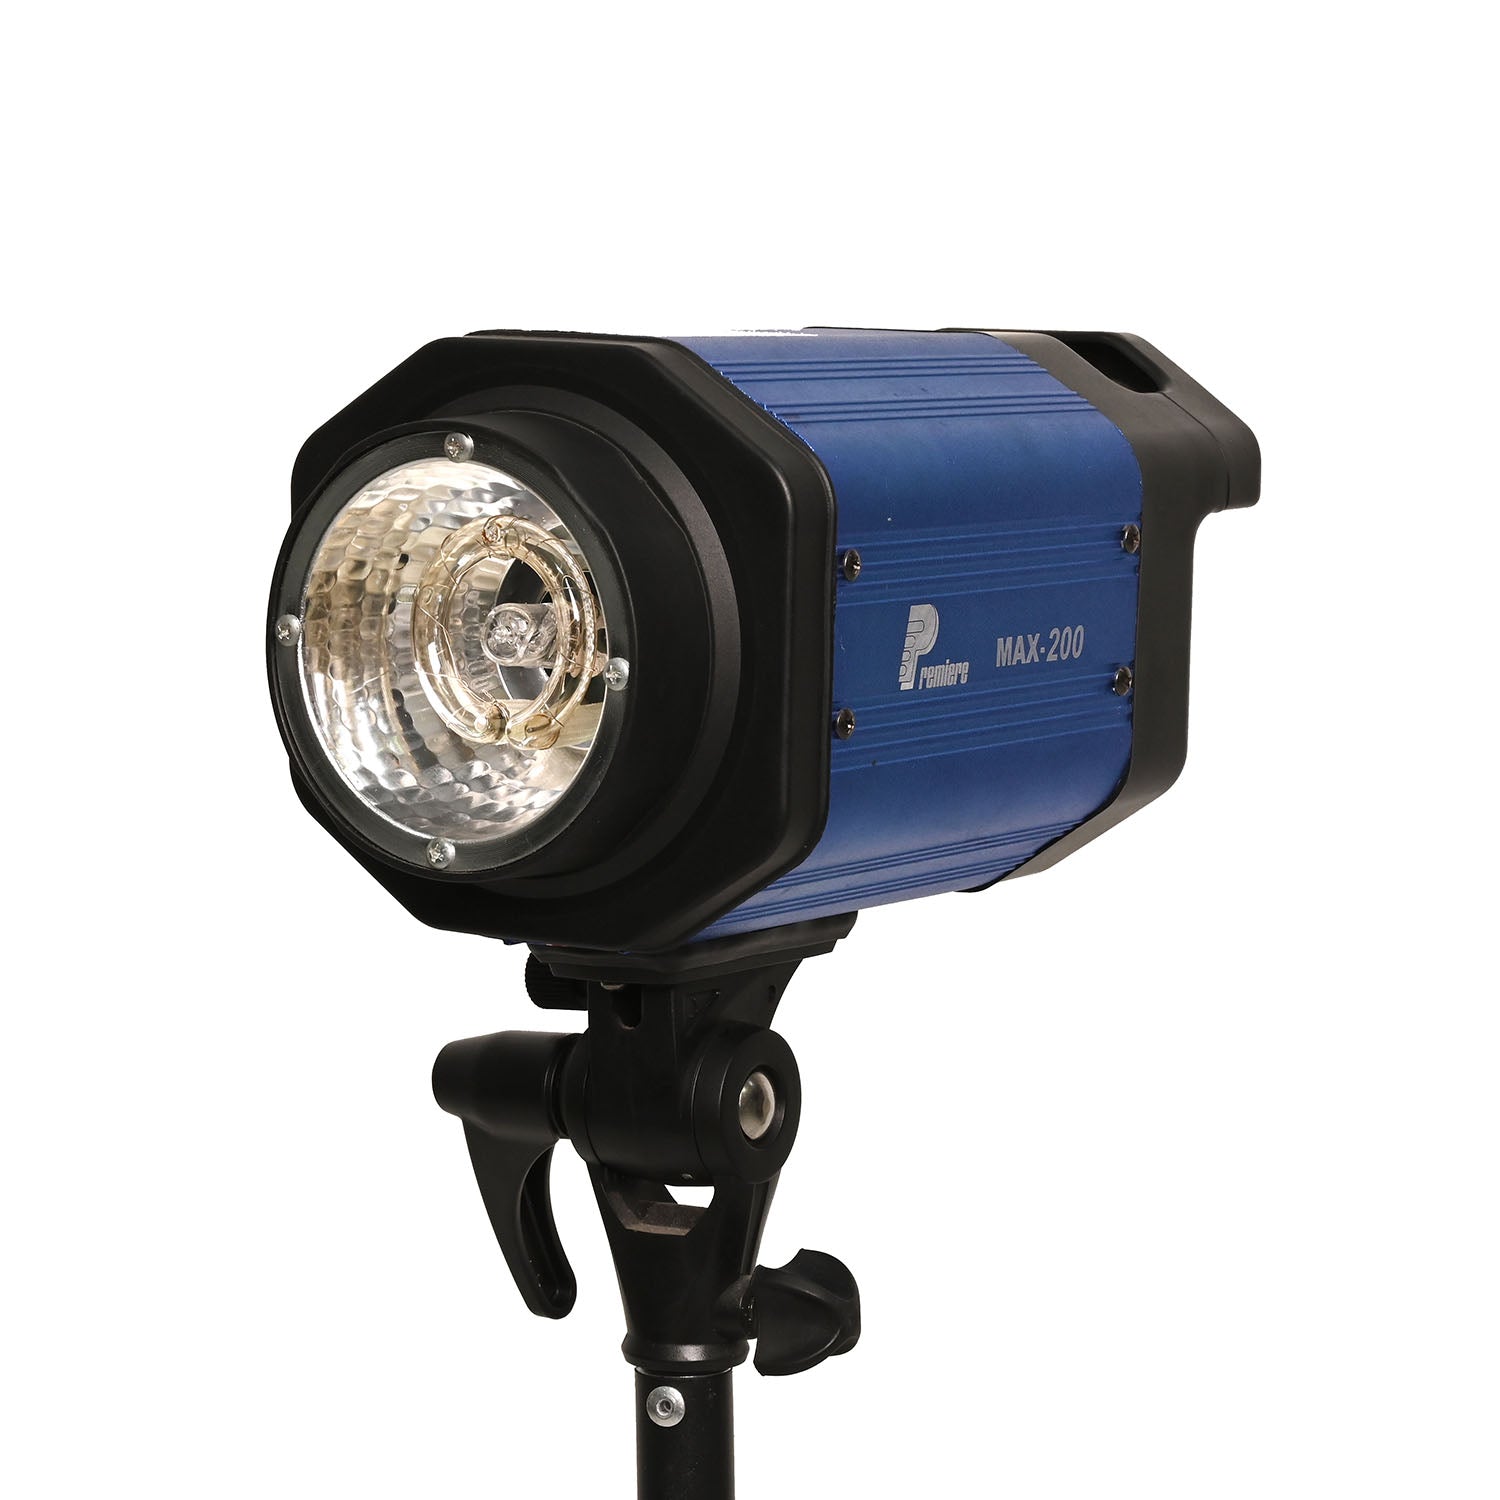 Premiere Max-200 LED Video Light